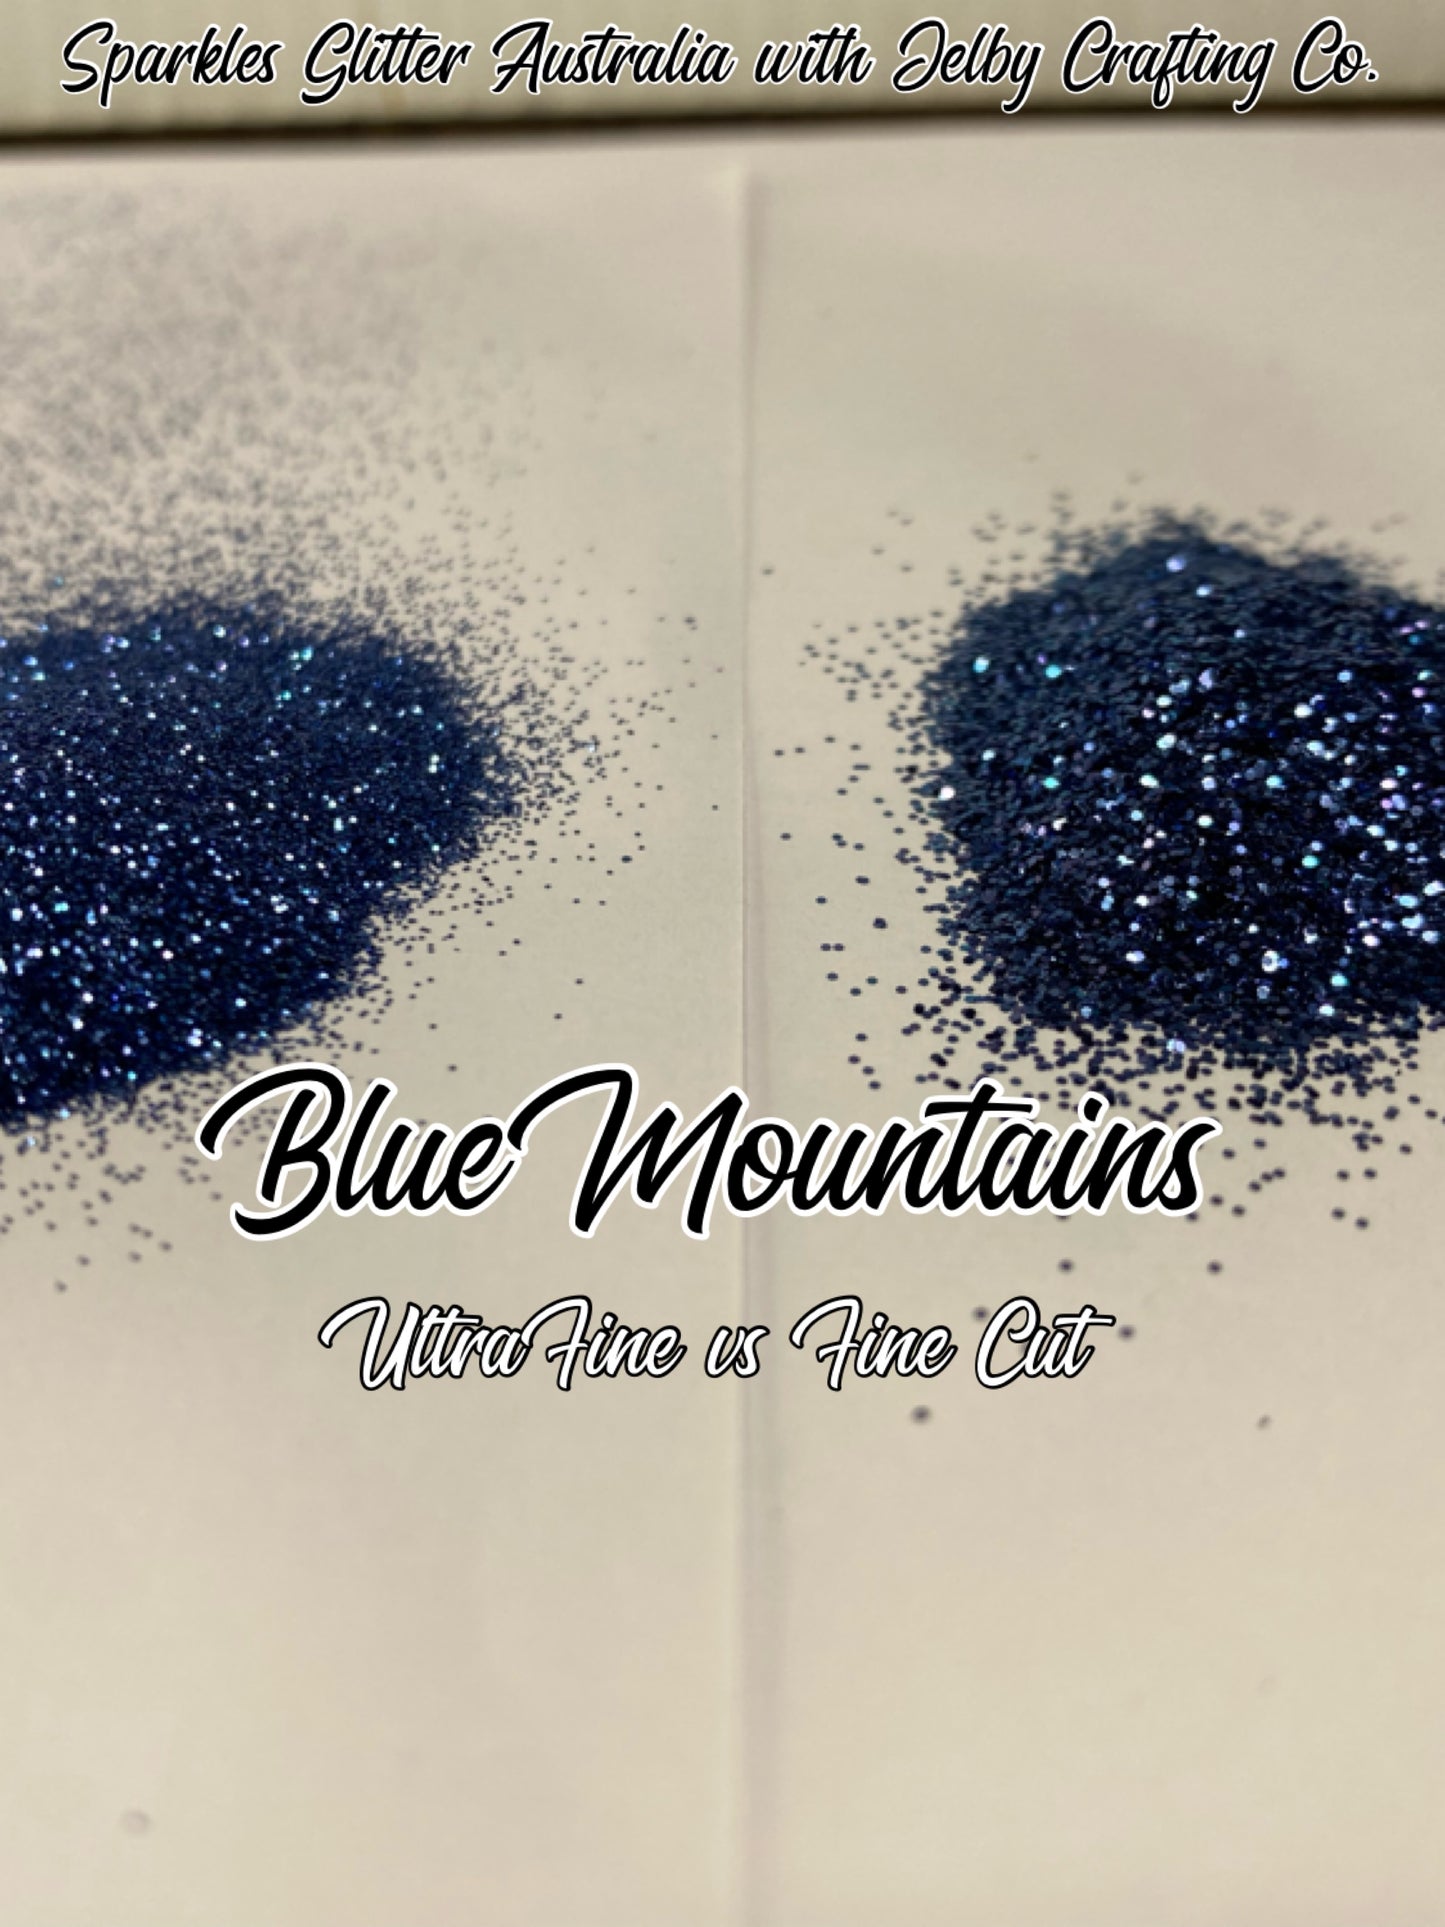 Blue Mountains | Fine Cut | Metallic Blue Glitter